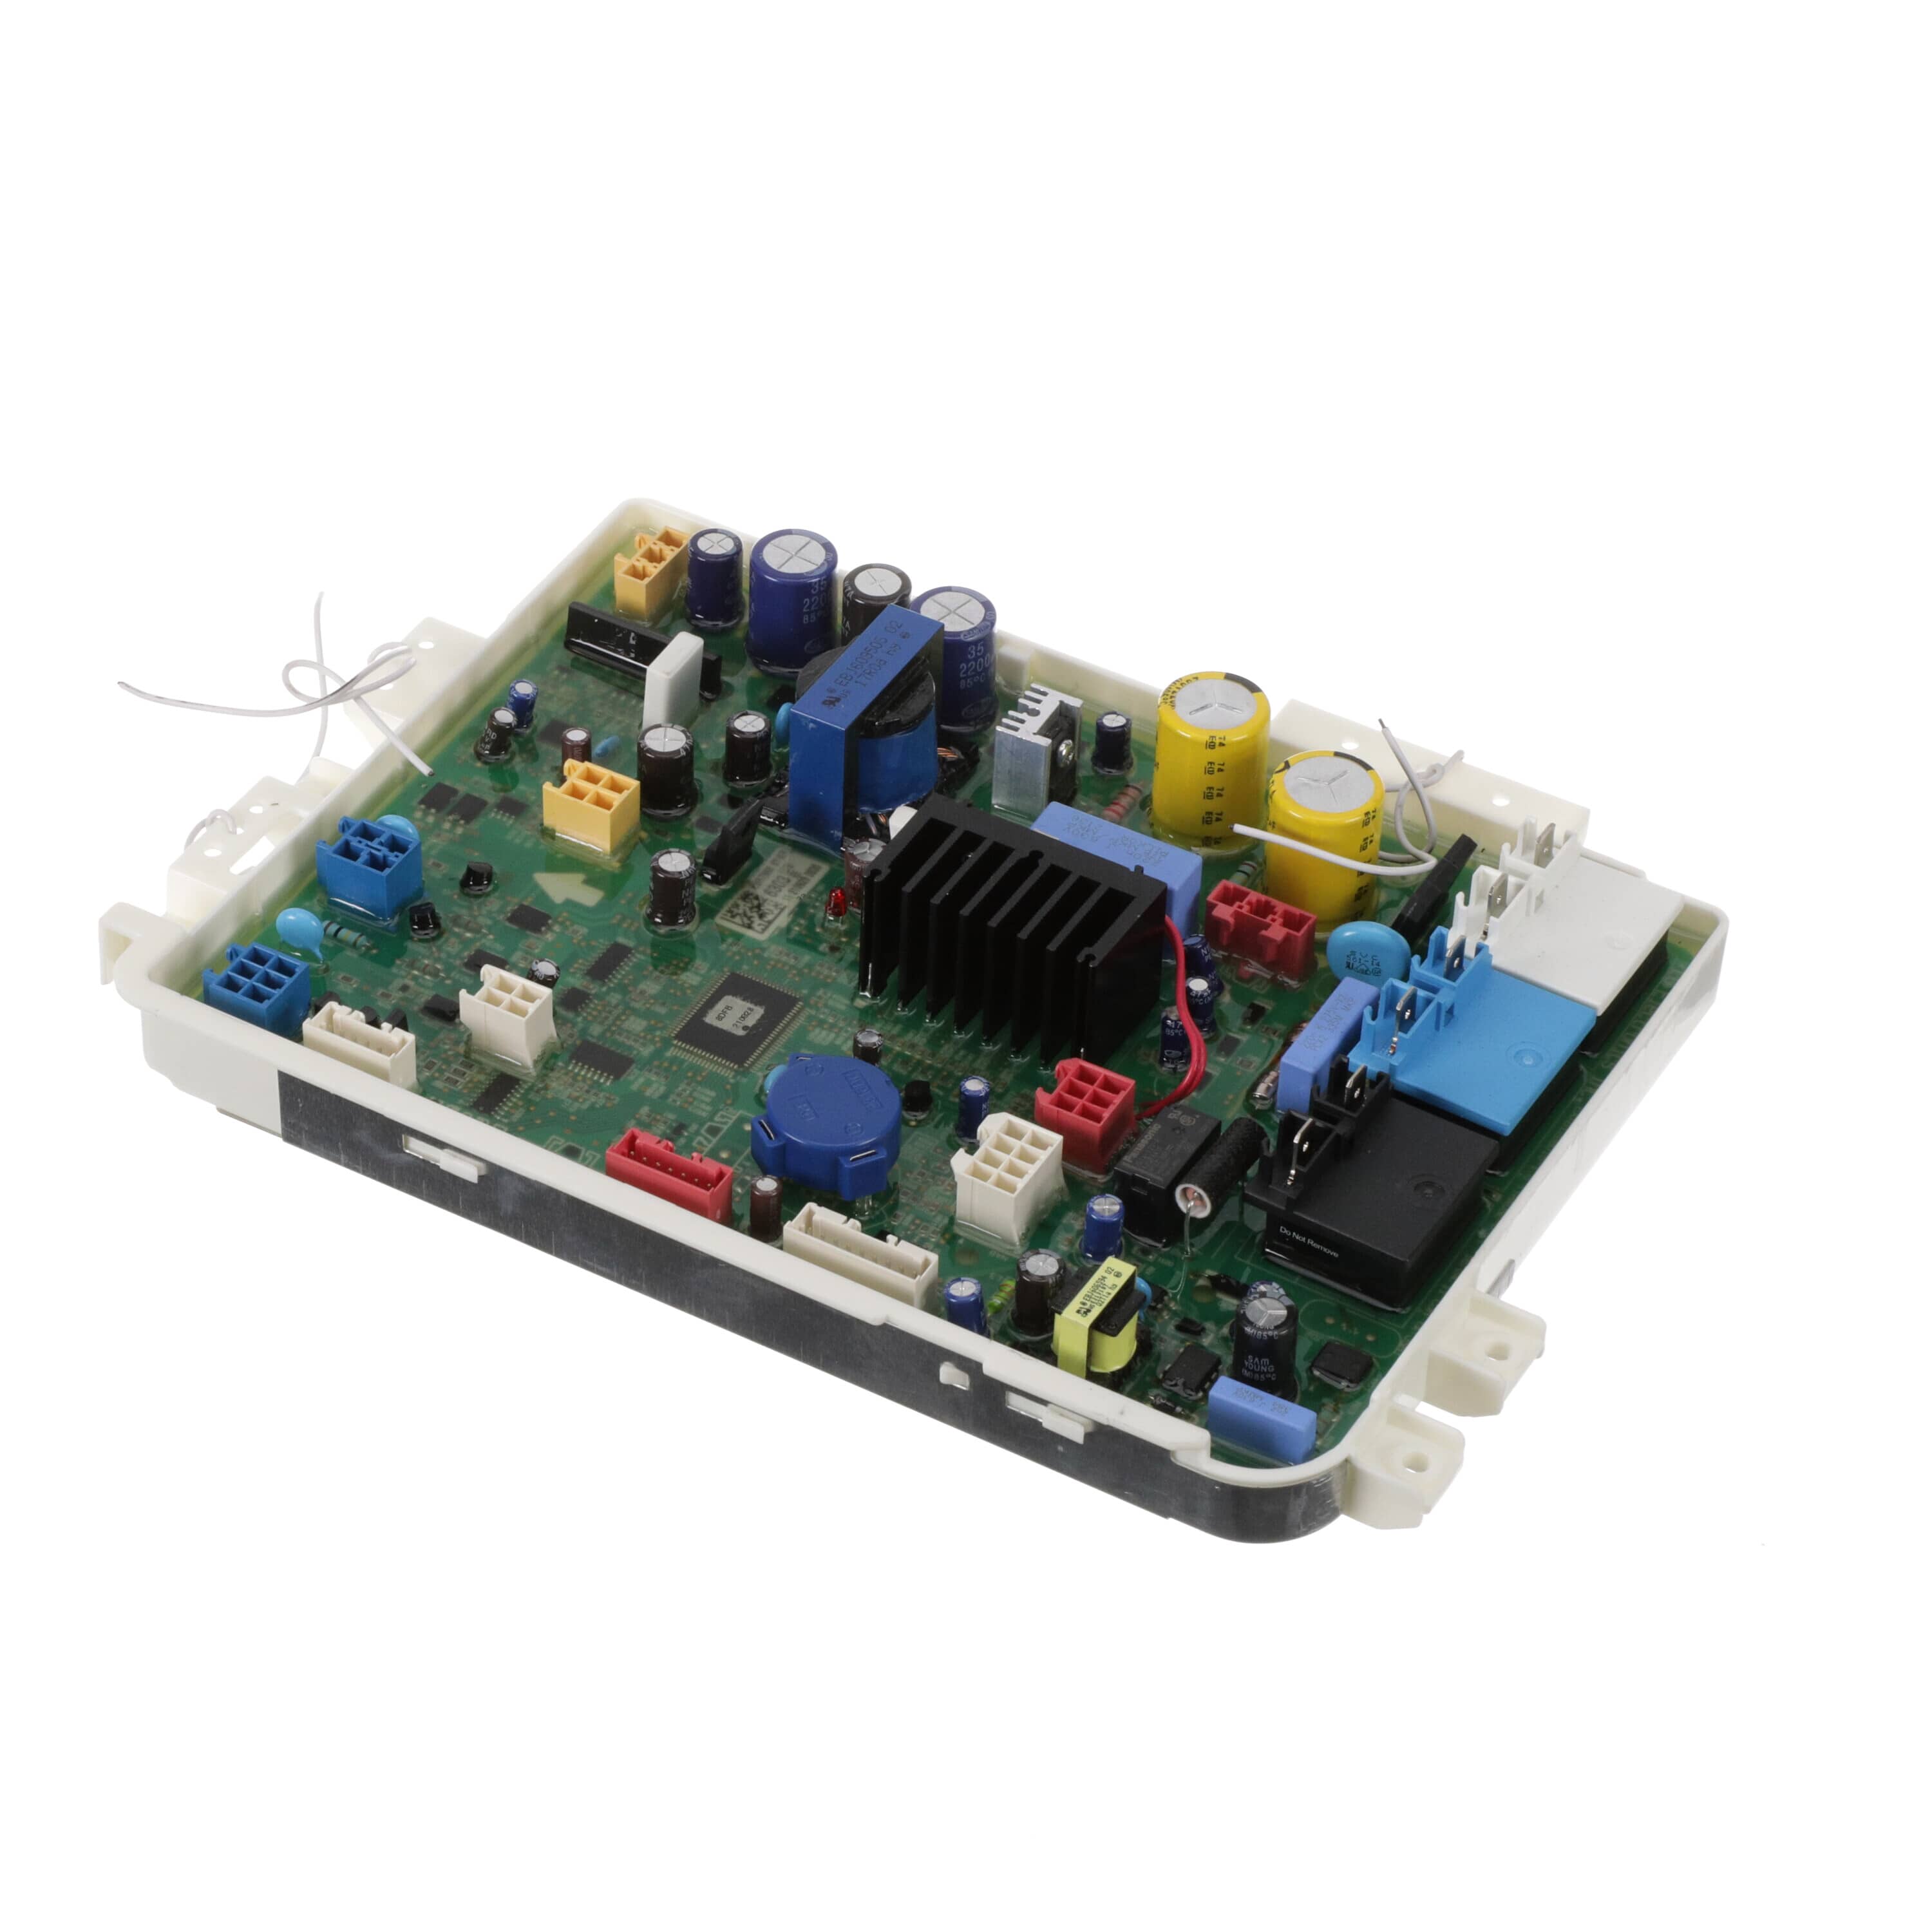 LG EBR79686303 Dishwasher Main PCB Assembly